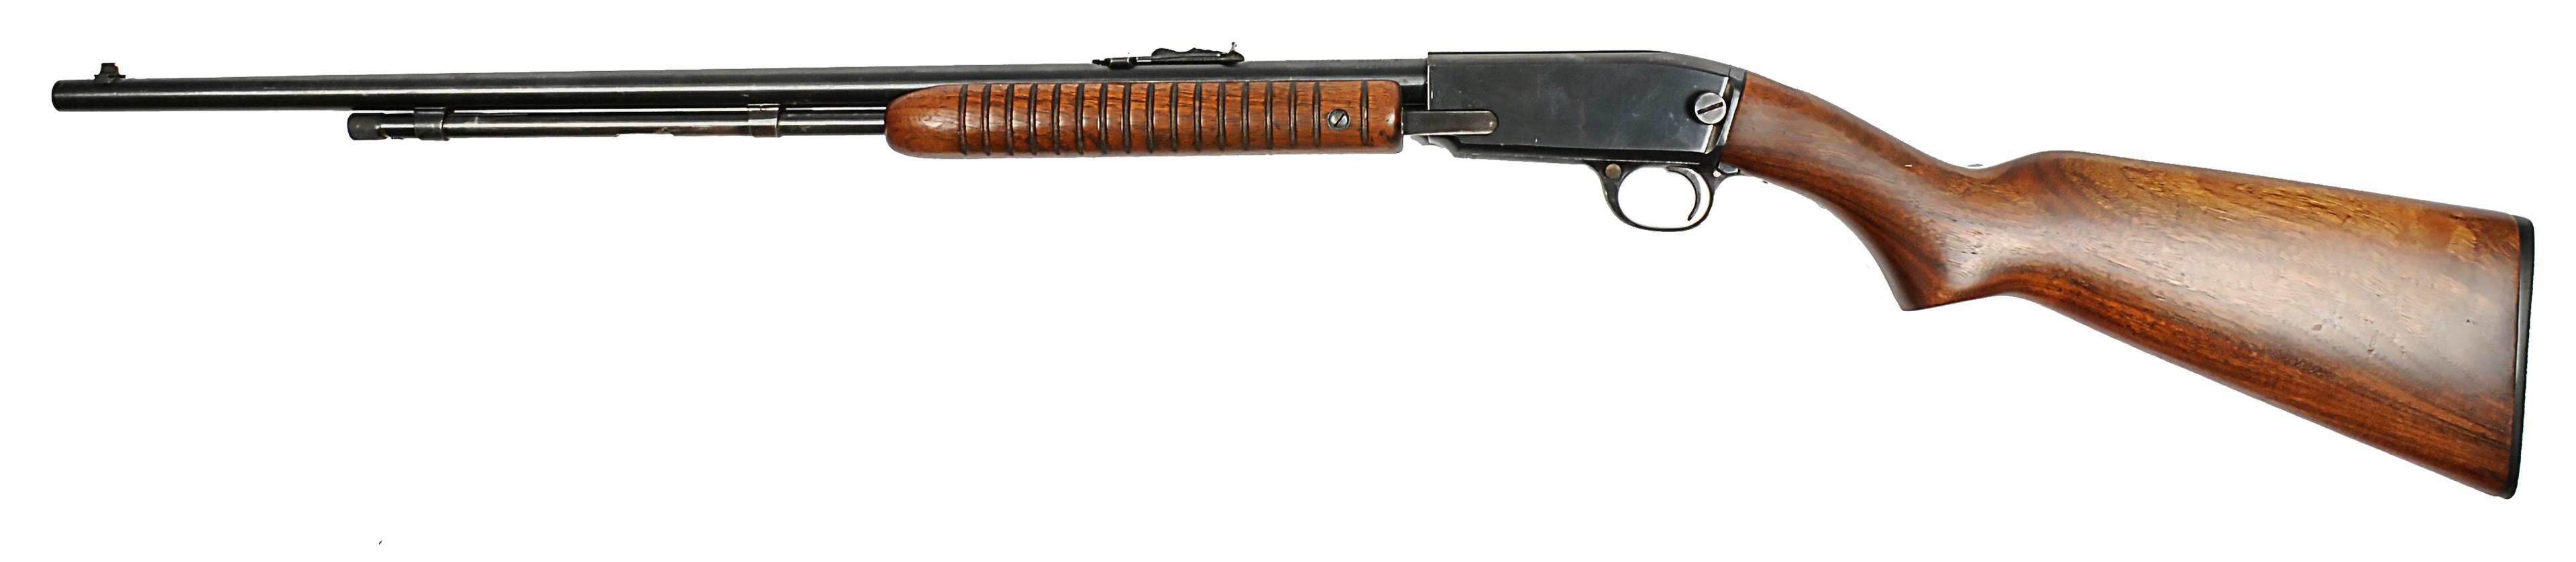 Winchester Model 61 .22 S, L, LR Pump-Action Rifle - FFL # 317878 (PAG 1)